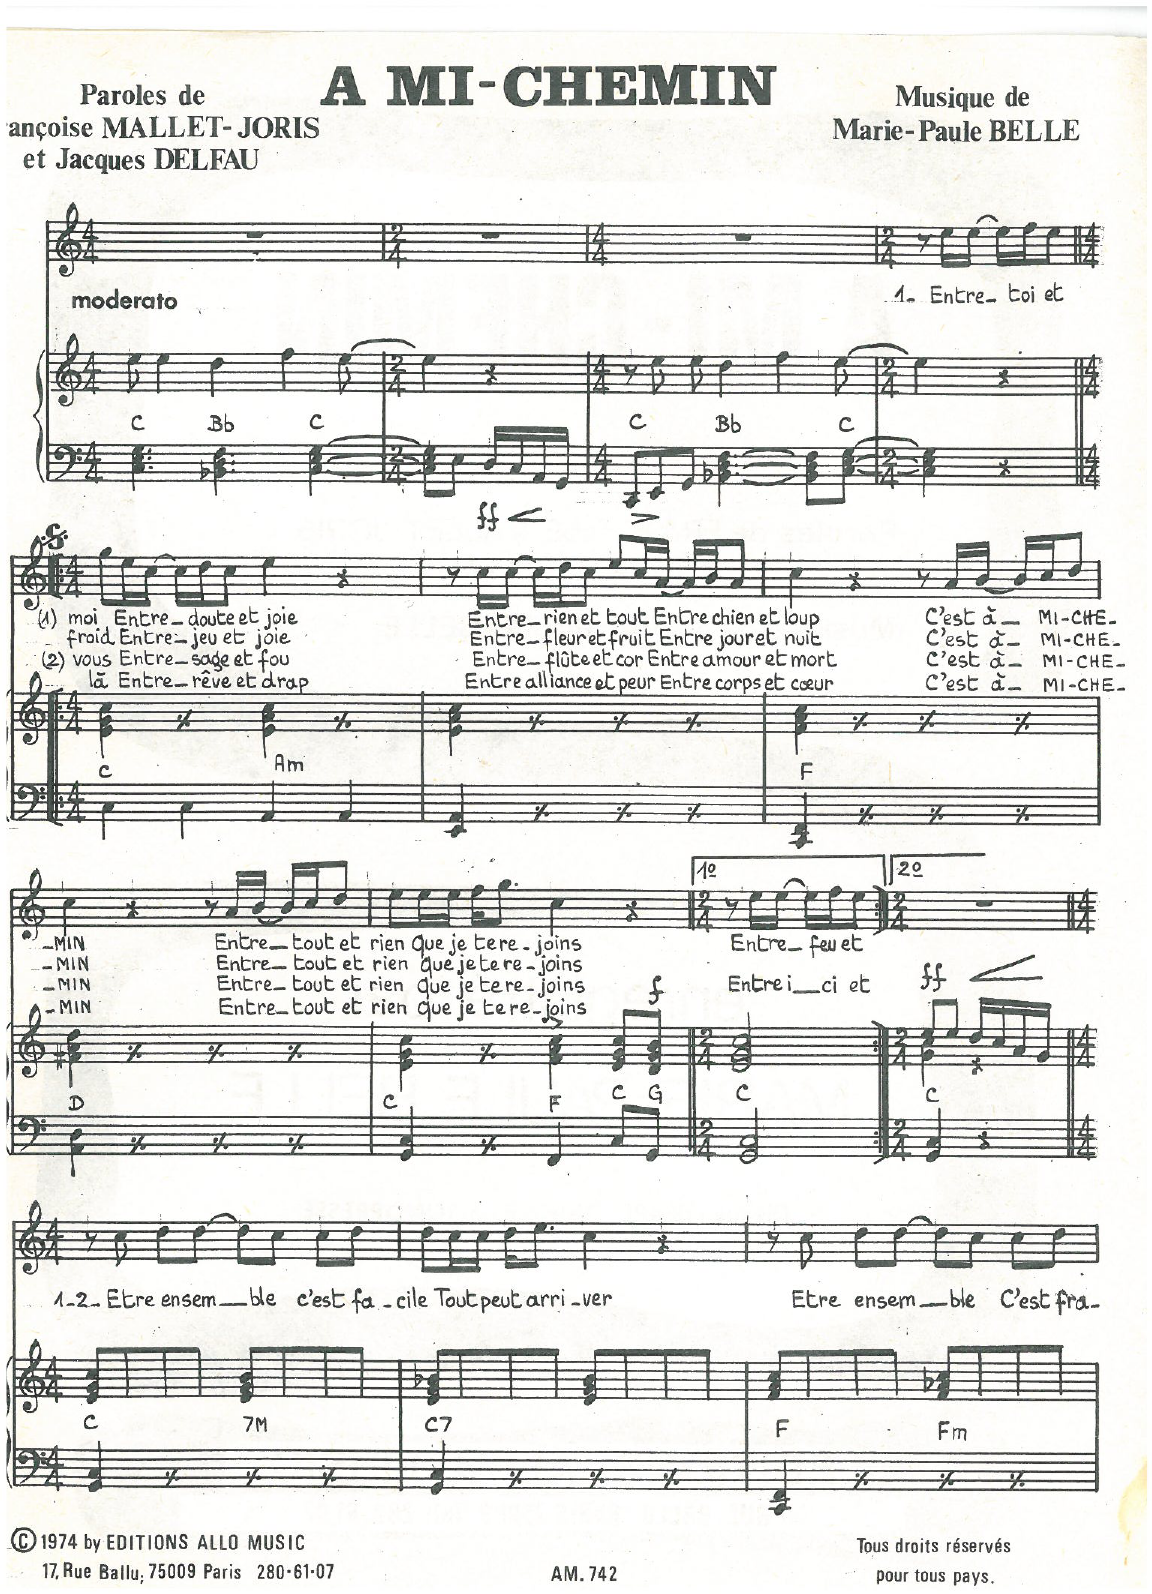 Jacques Delfau, Françoise Mallet-Joris and Marie Paule Belle A Mi-Chemin Sheet Music Notes & Chords for Piano & Vocal - Download or Print PDF